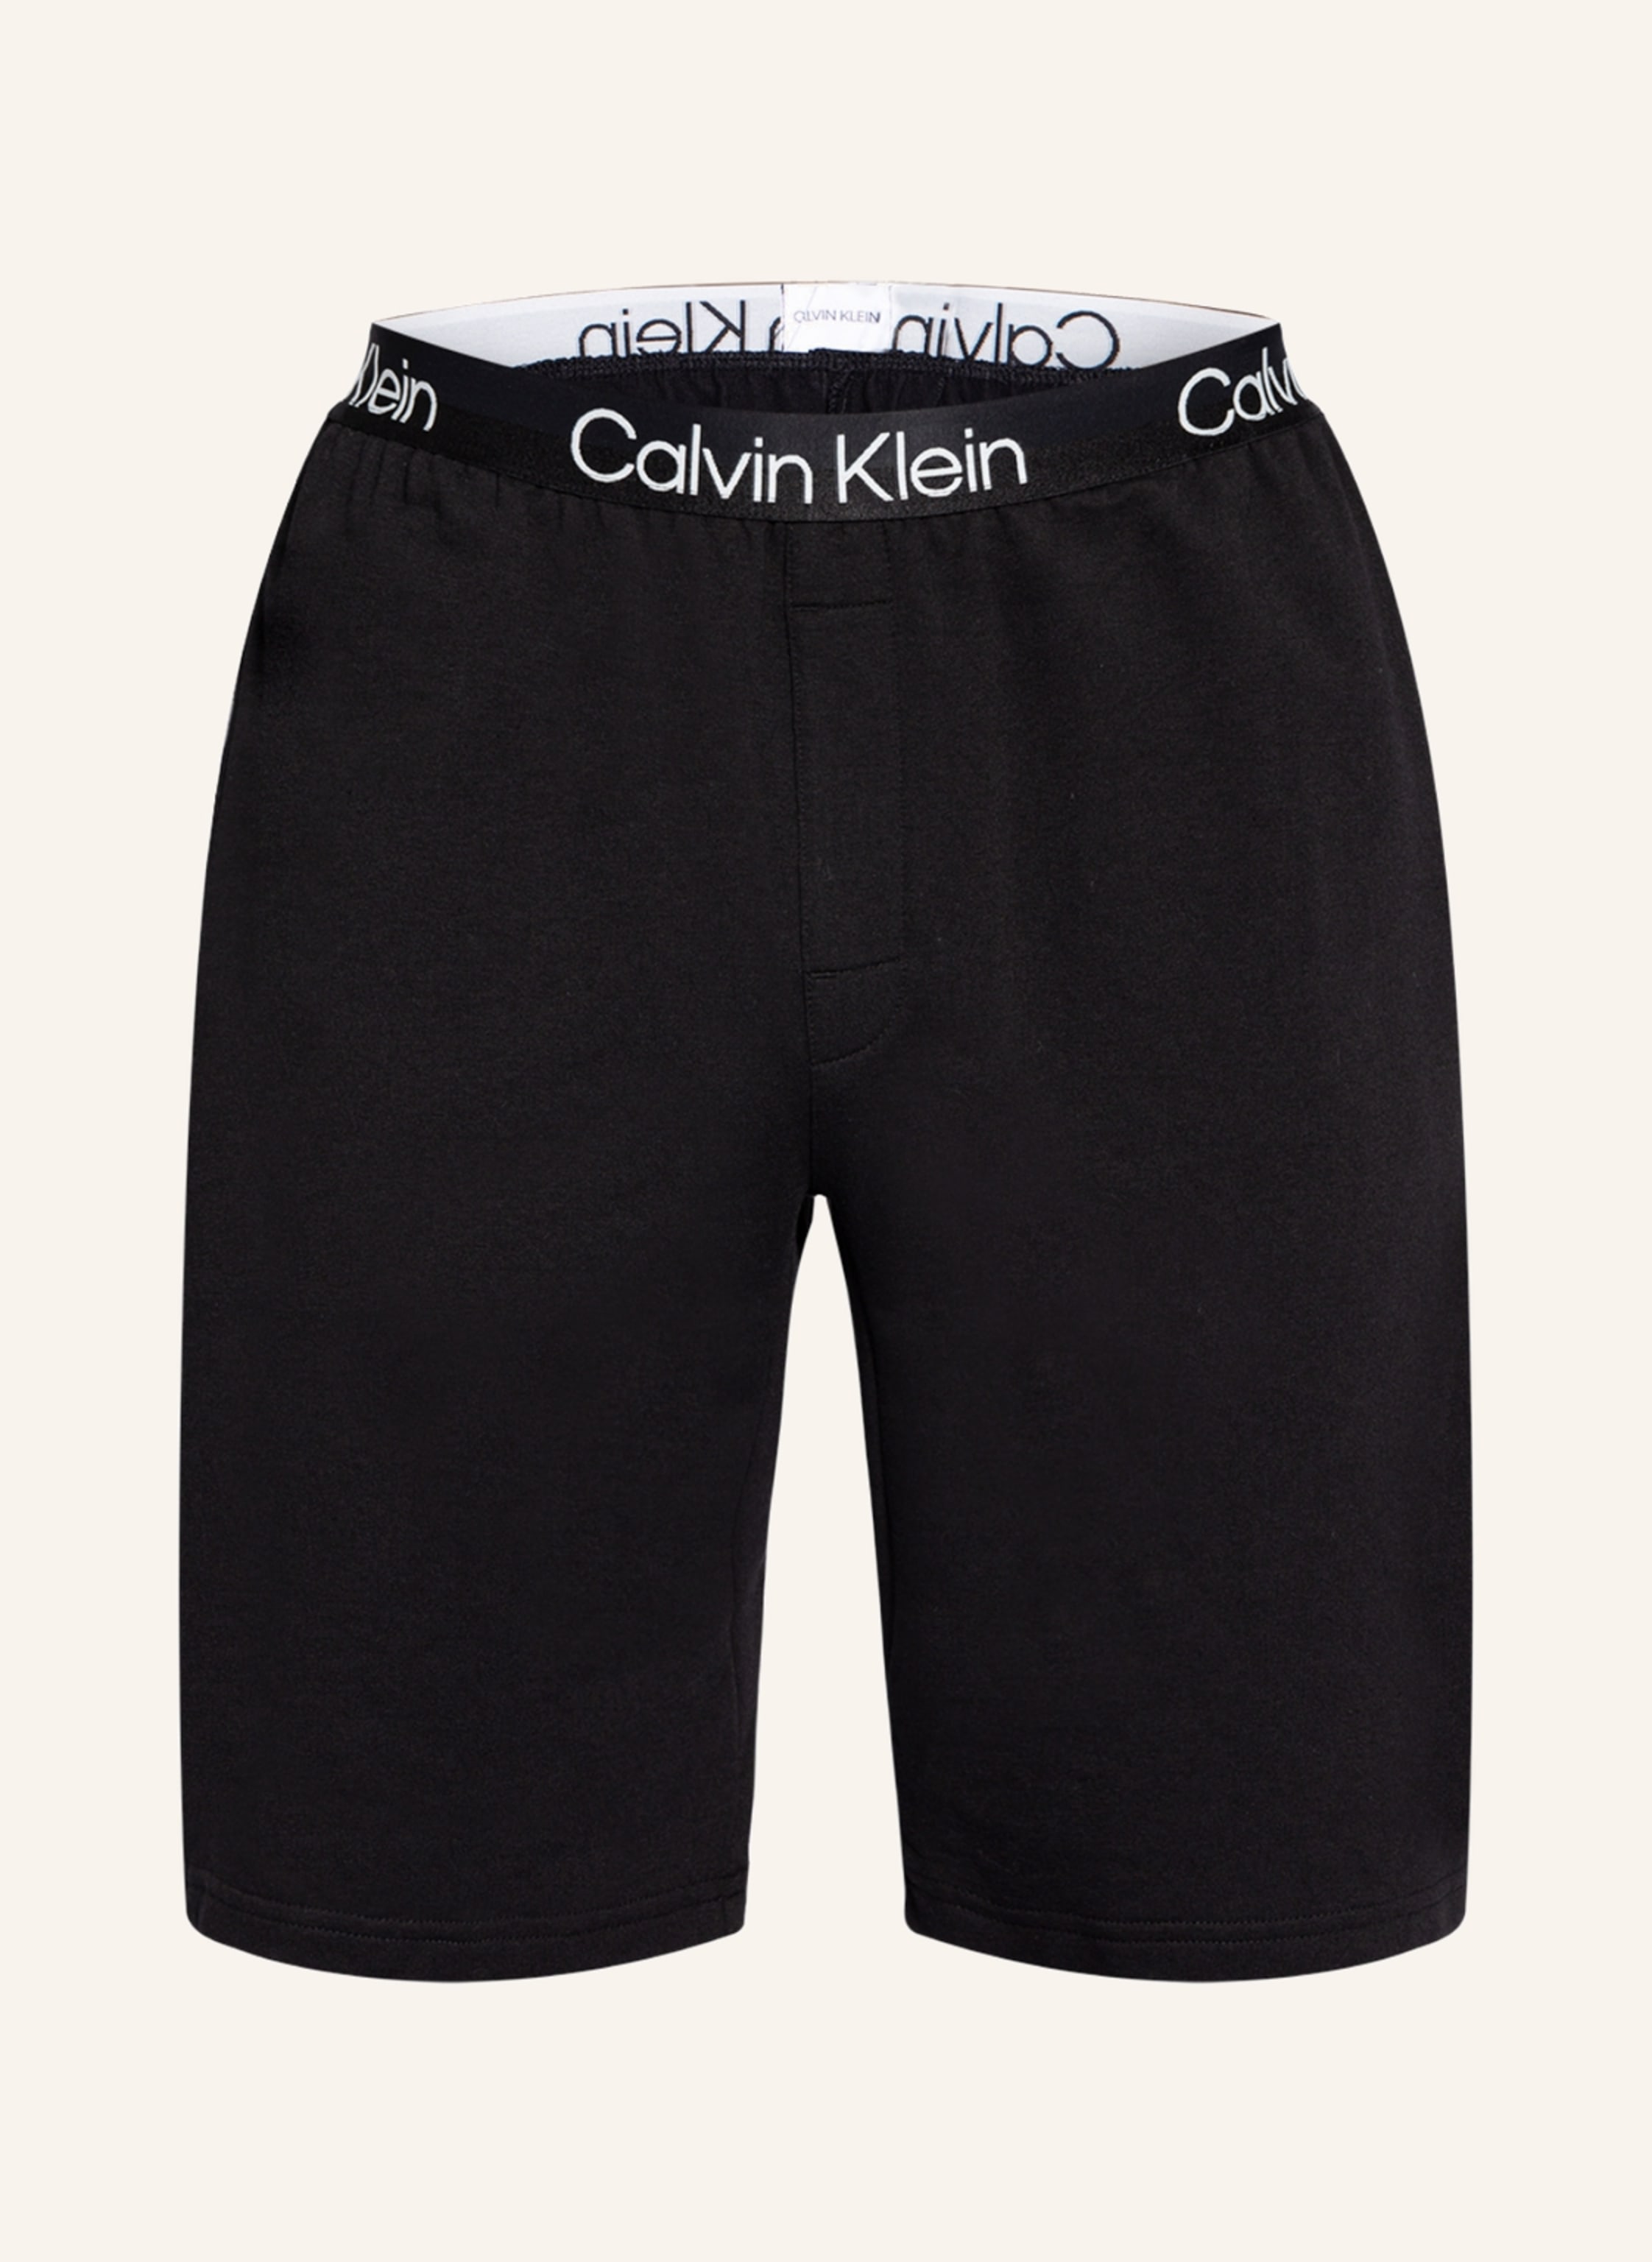 Calvin Klein Lounge shorts MODERN STRUCTURE in black | Breuninger